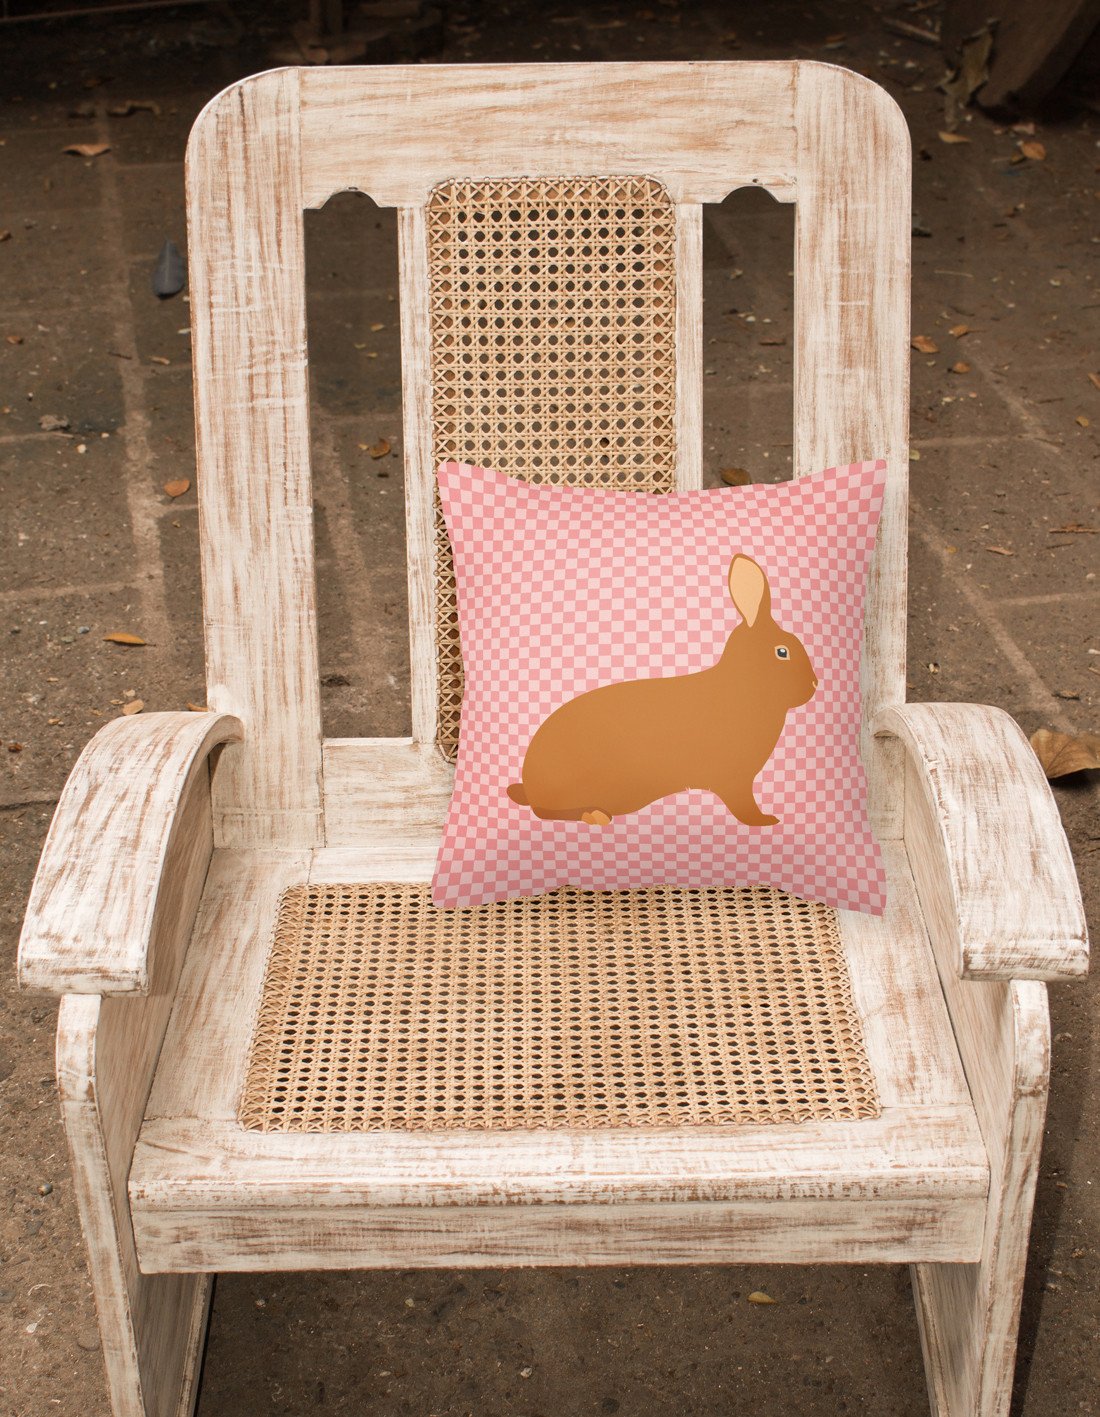 Rex Rabbit Pink Check Fabric Decorative Pillow BB7969PW1818 by Caroline's Treasures